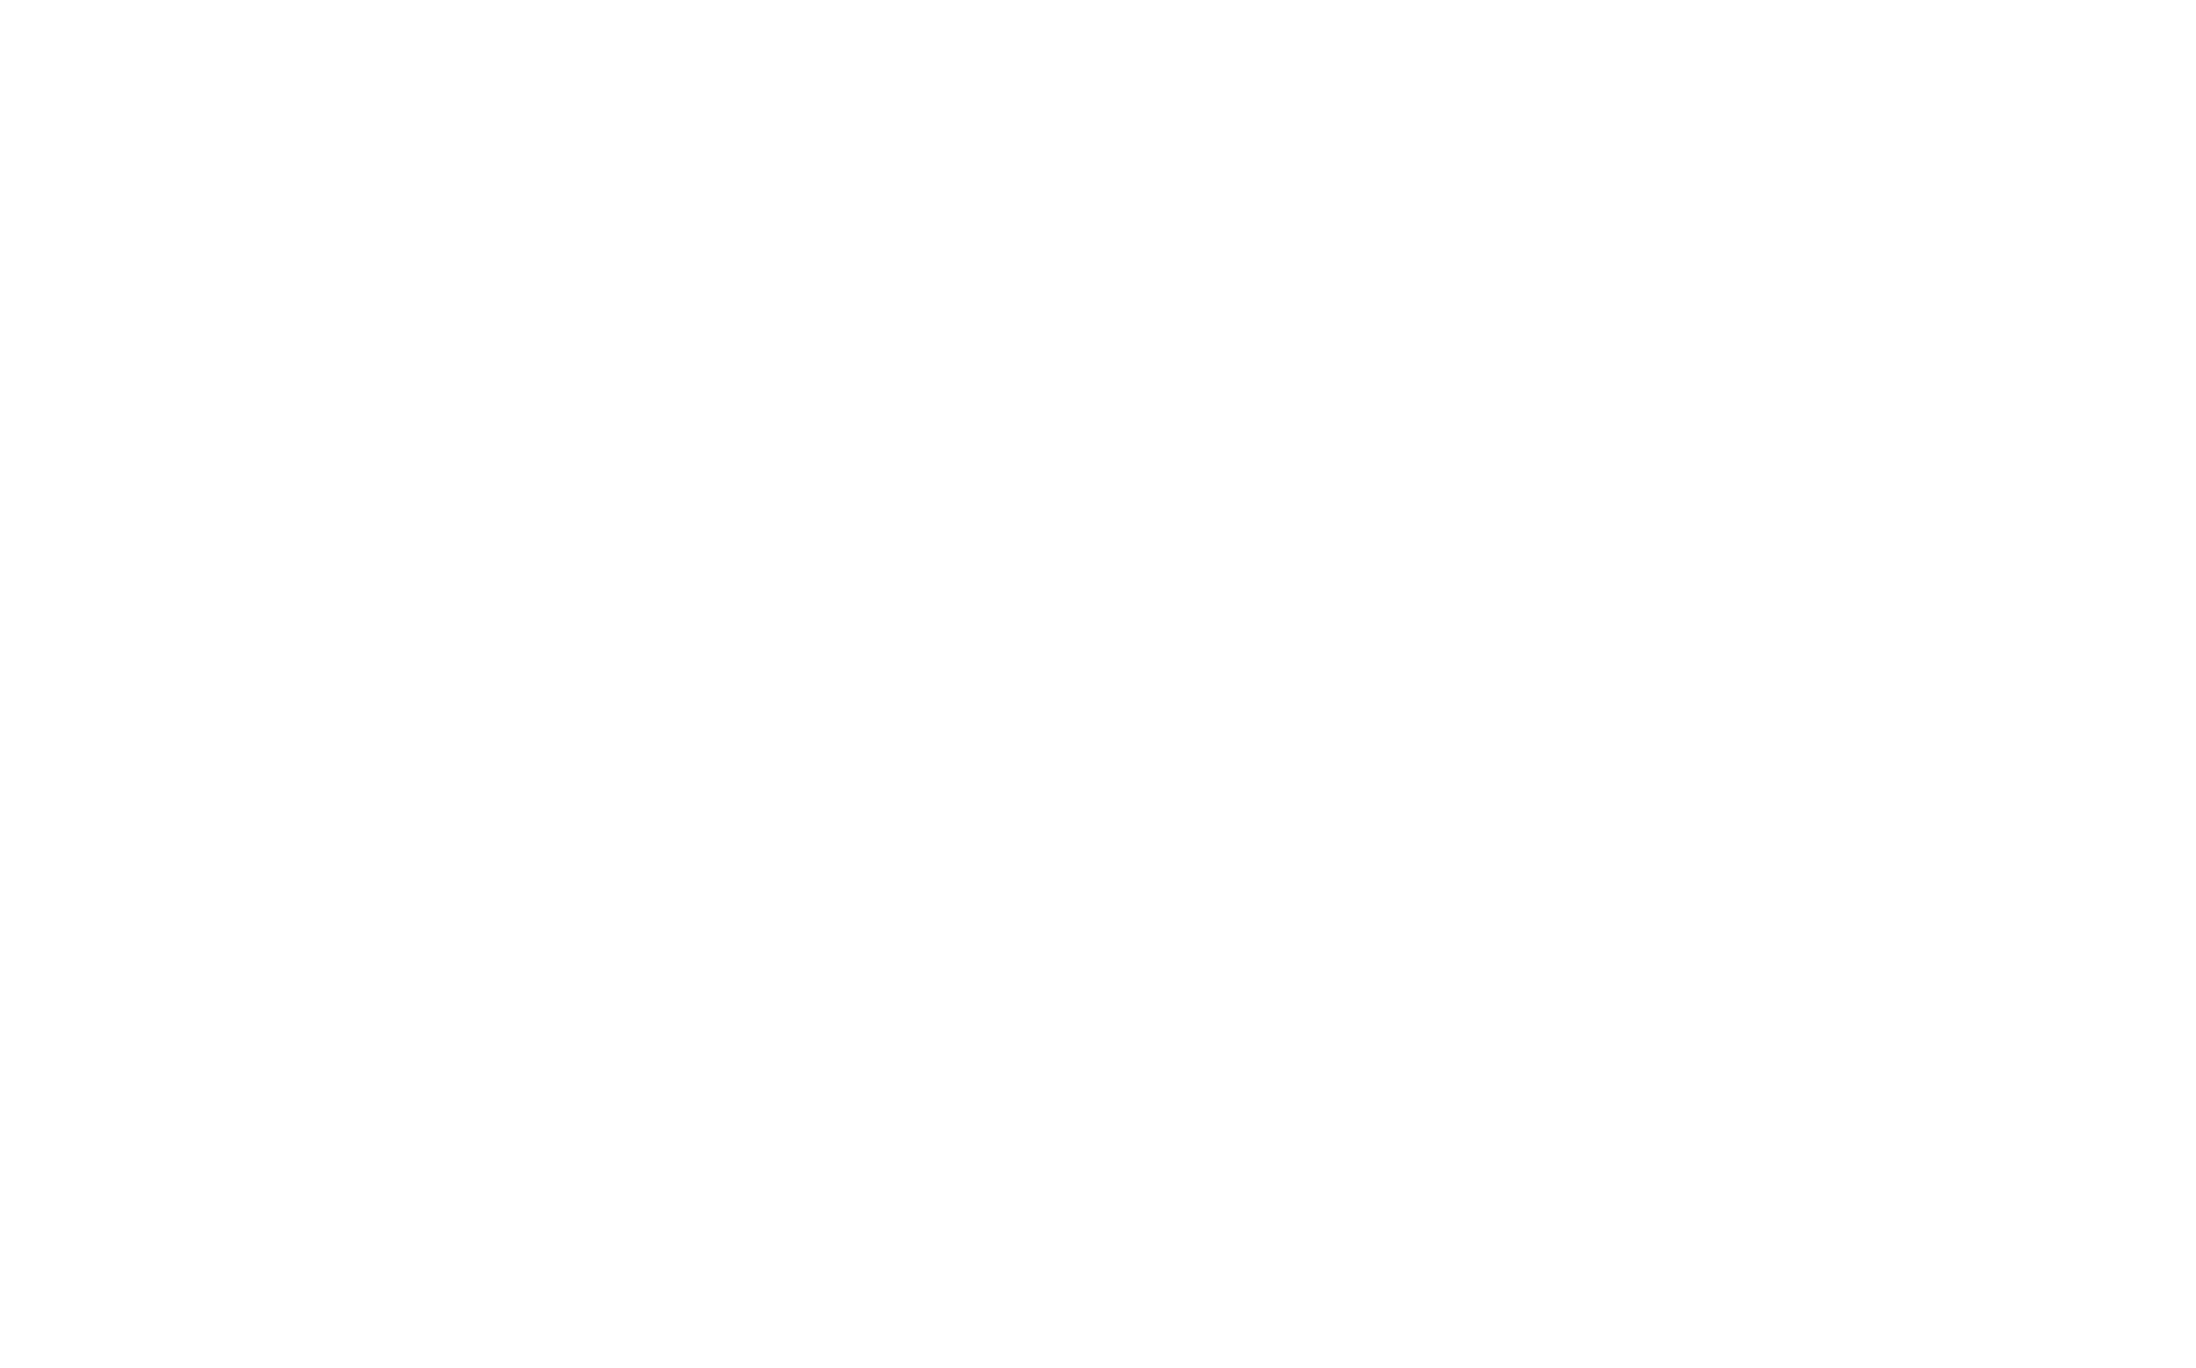 LOGO, MONOGRAM, AND SEAL